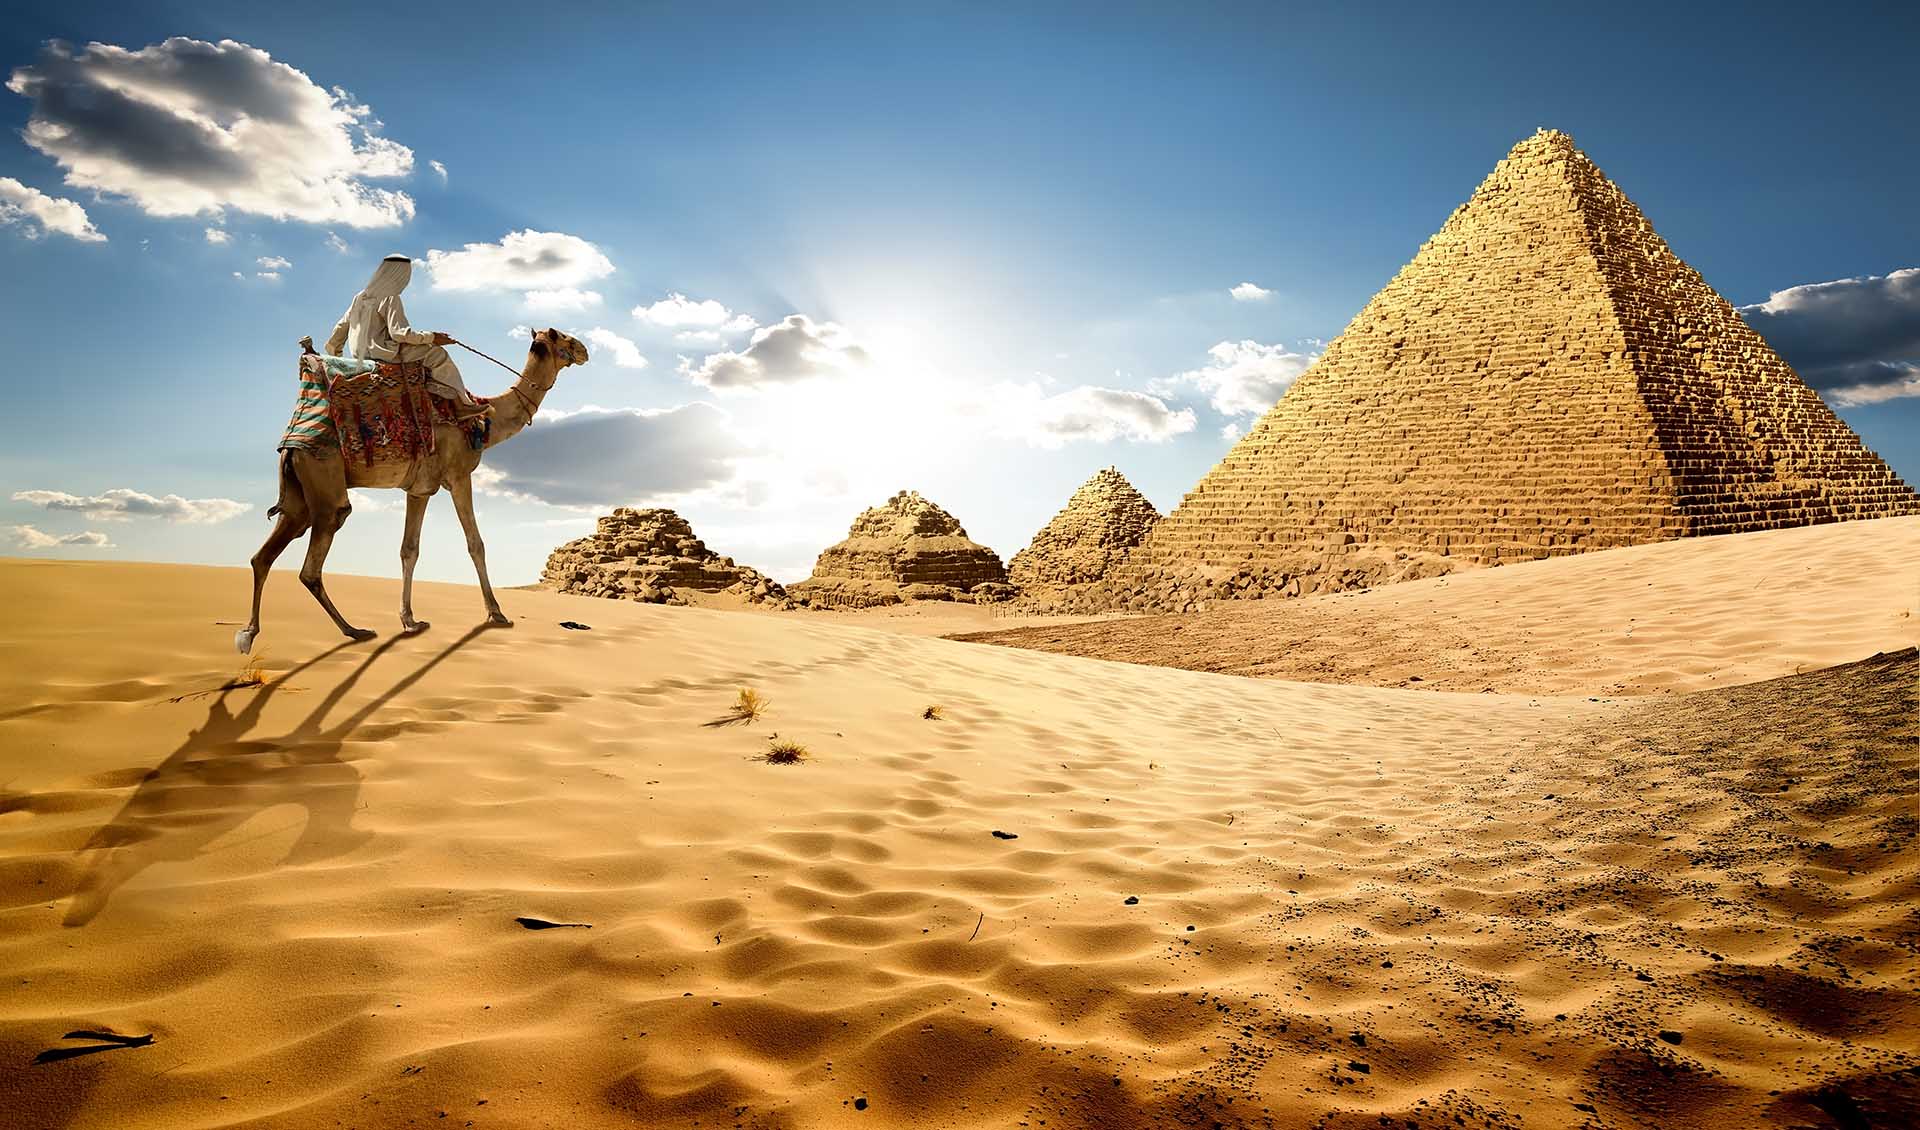 Bedouin on camel near pyramids in desert